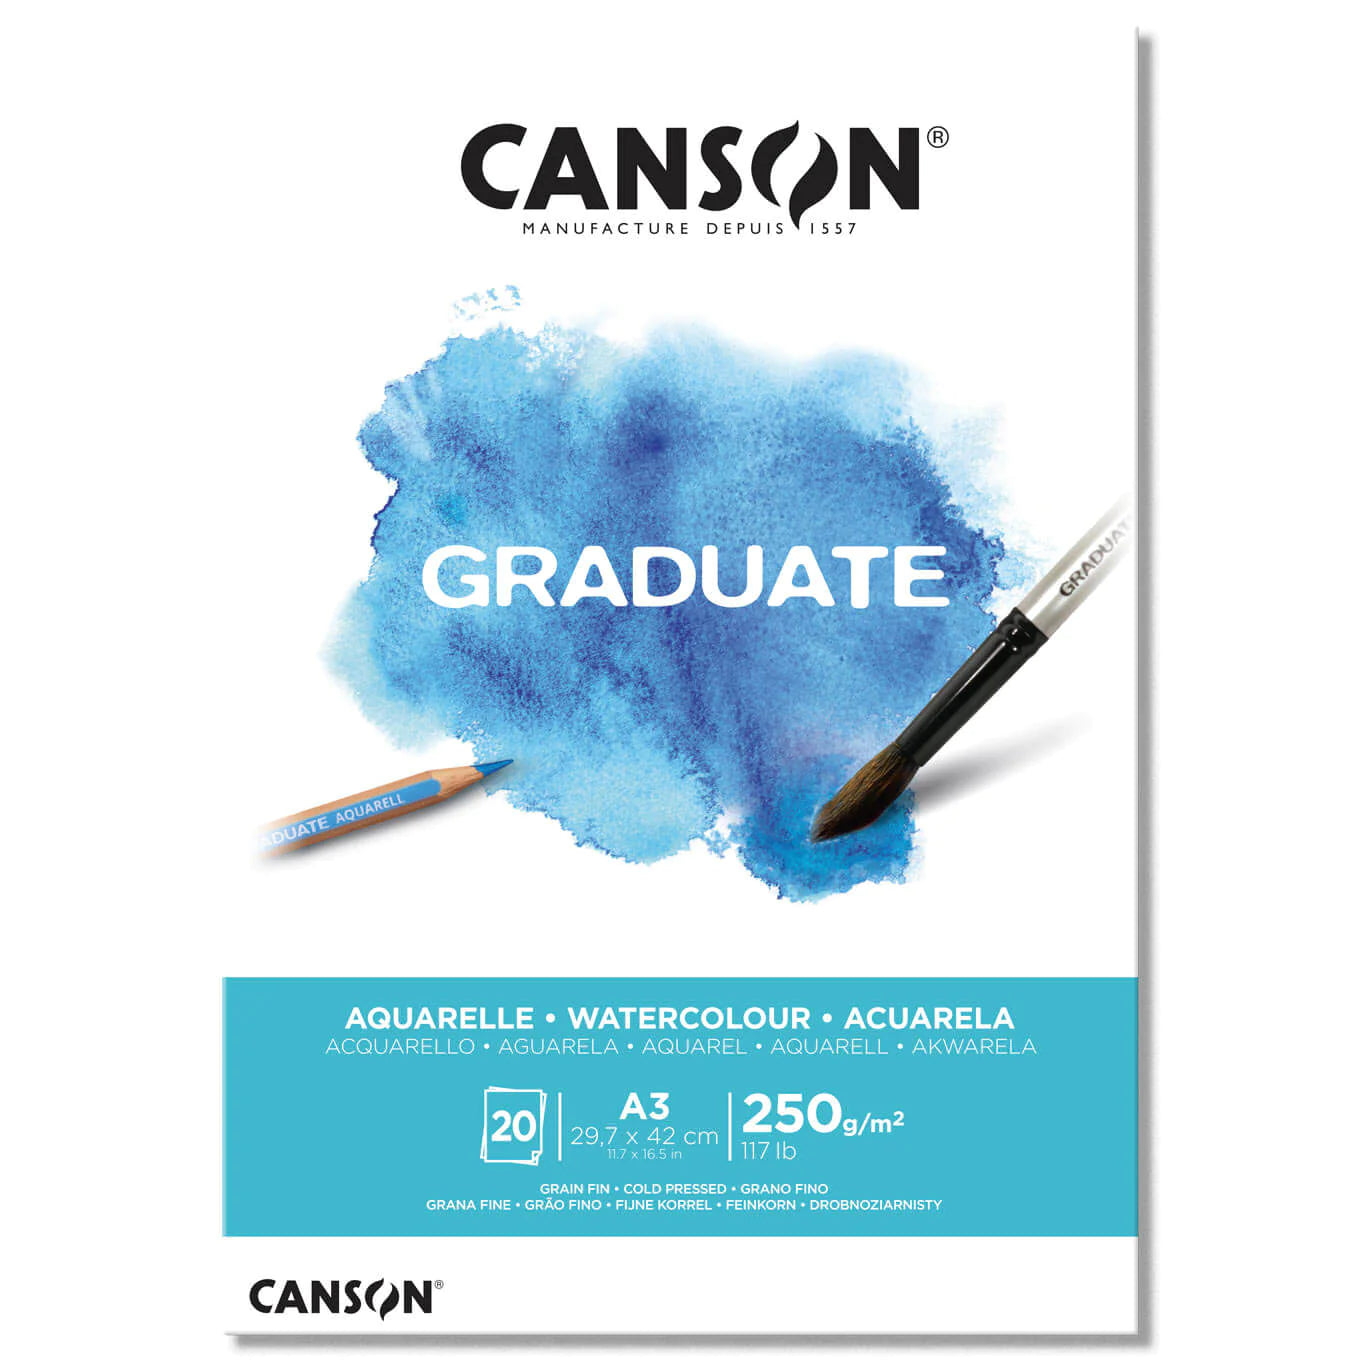 Canson Graduate Watercolor Pad 250 gsm